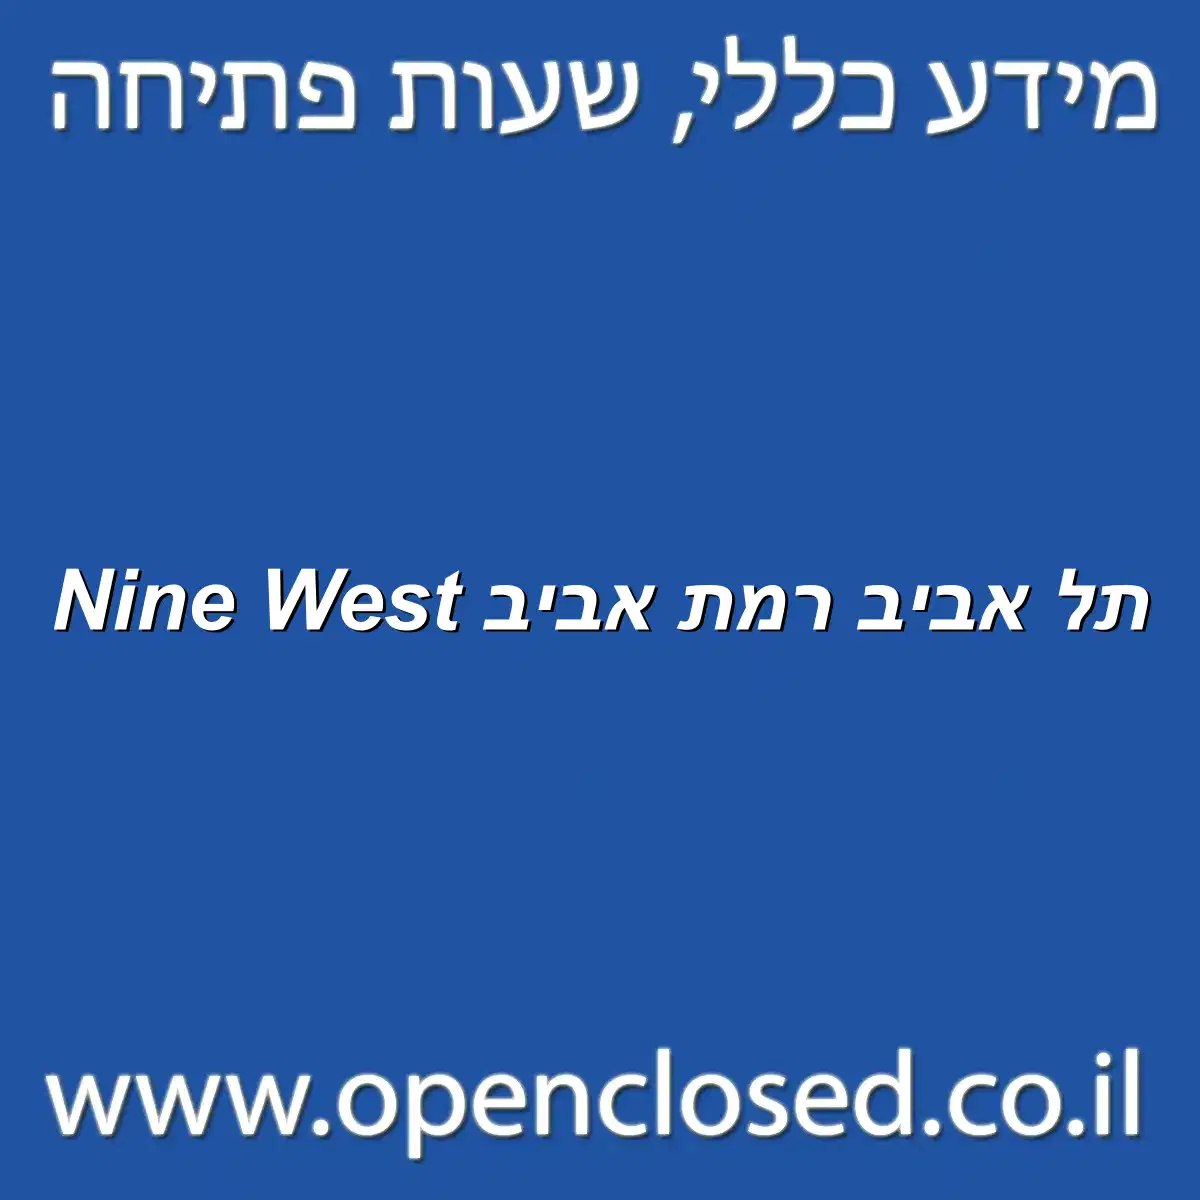 Nine West תל אביב רמת אביב